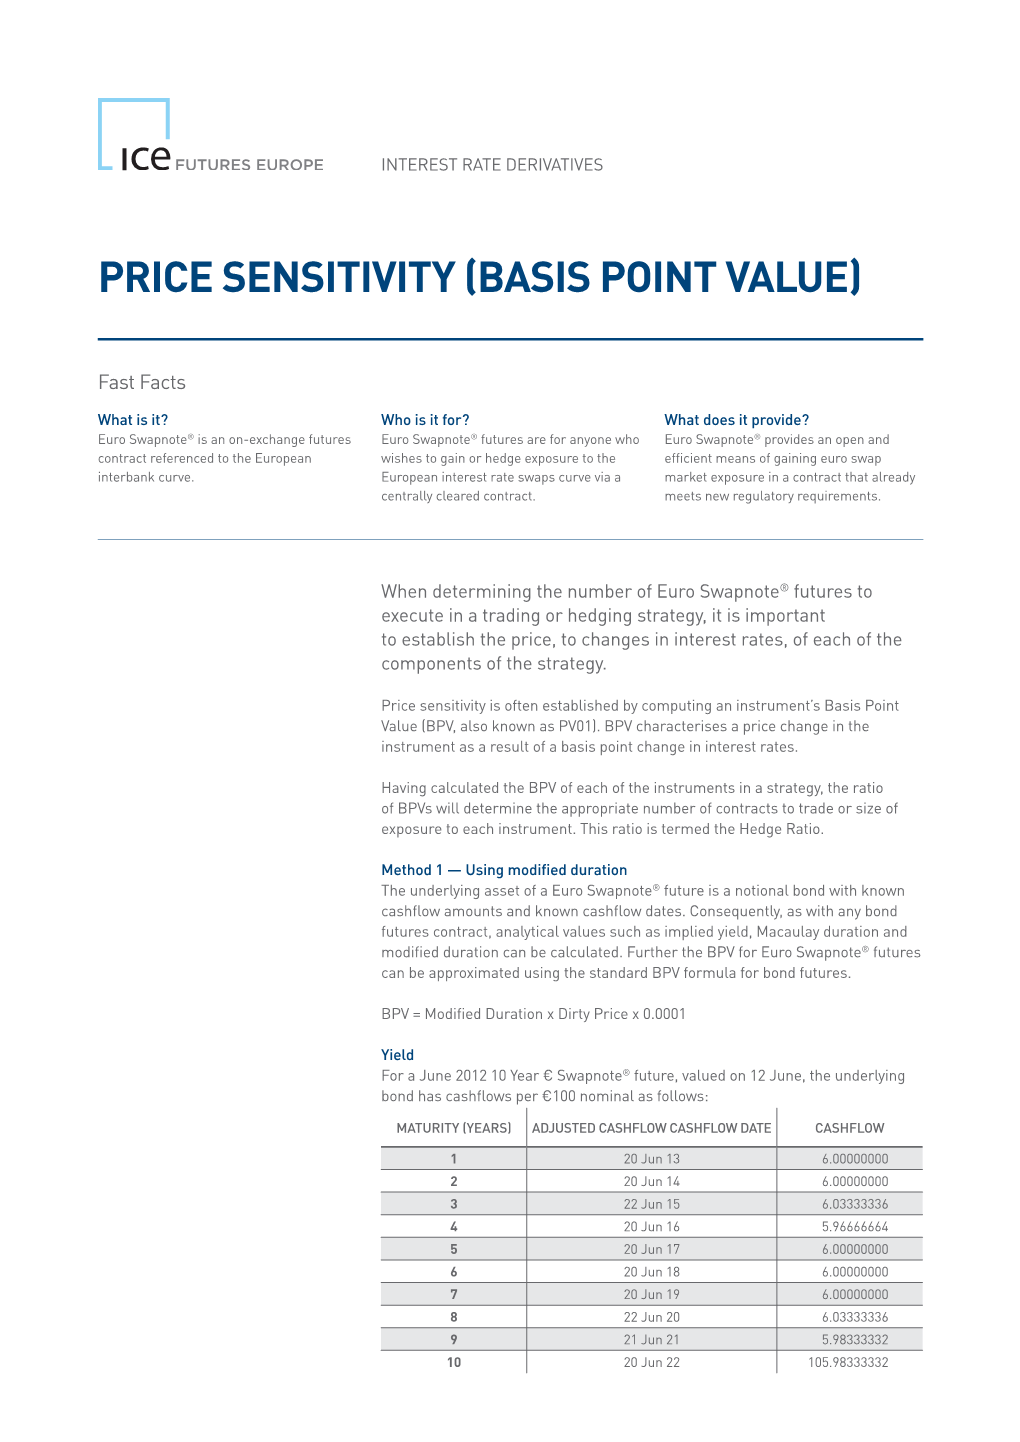 Price Sensitivity (Basis Point Value)